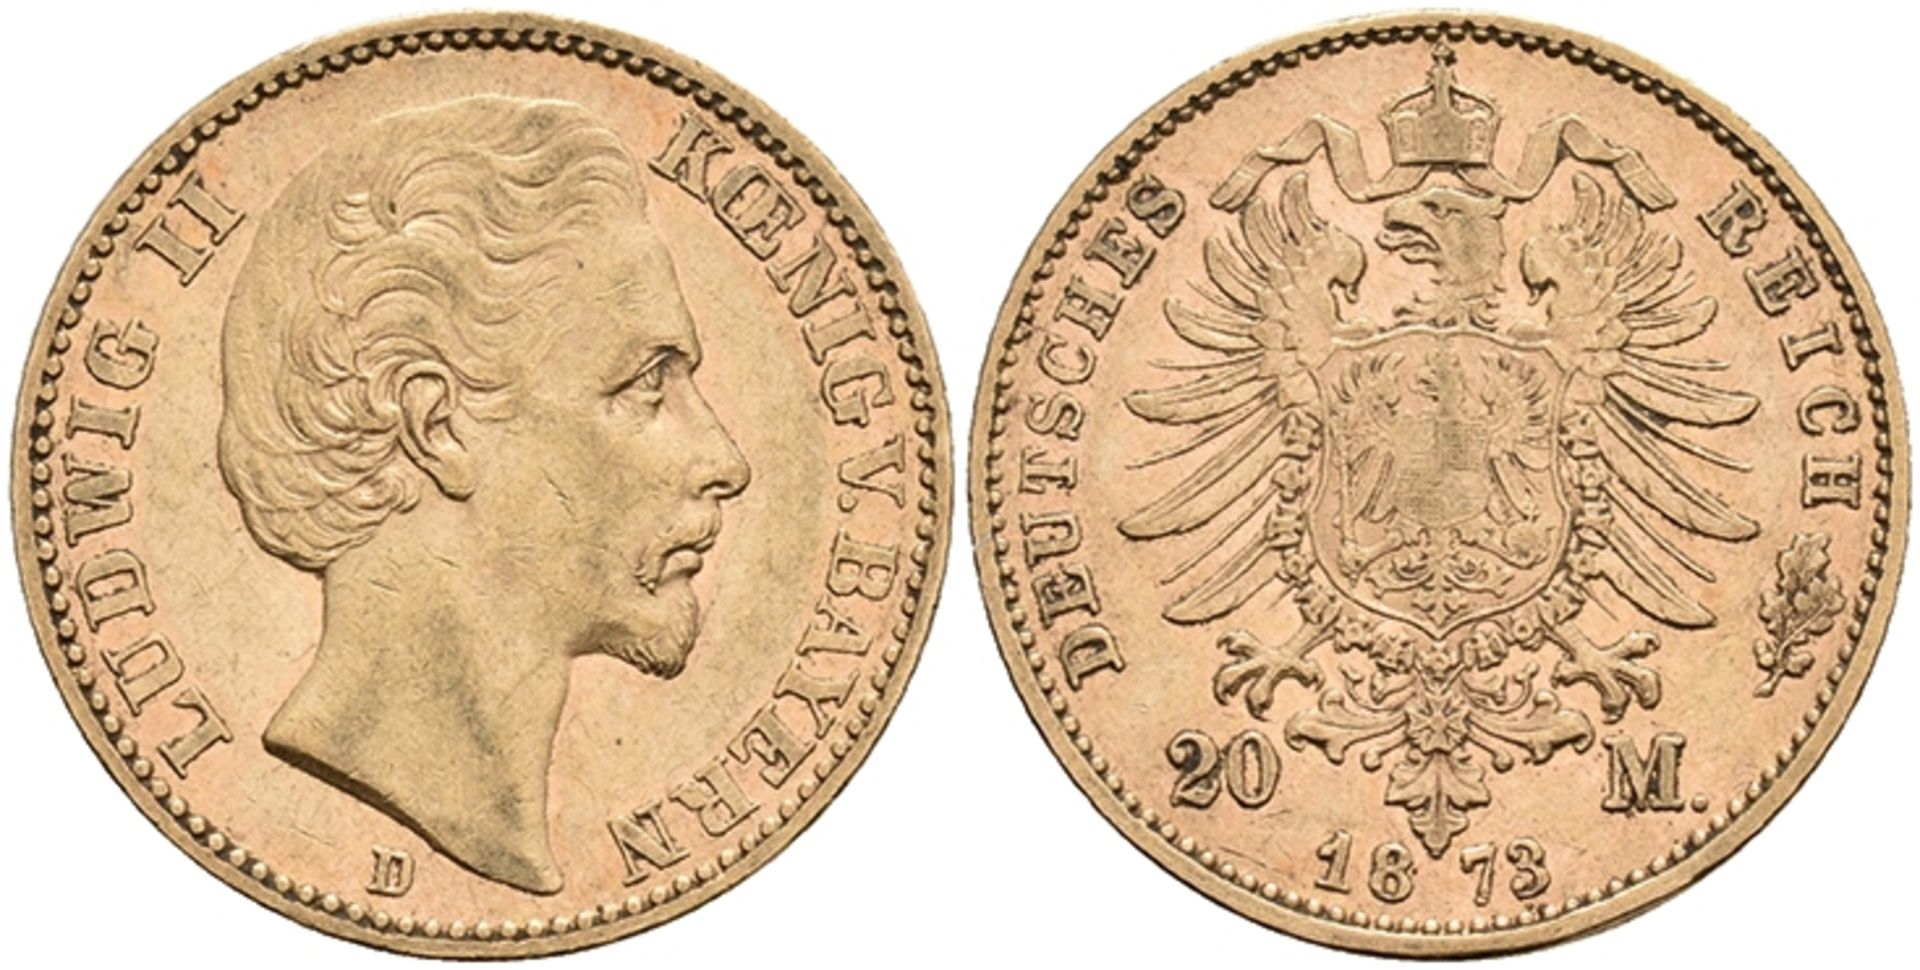 20 Mark, 1873, Ludwig II., small edge nick, ss. J. 194.